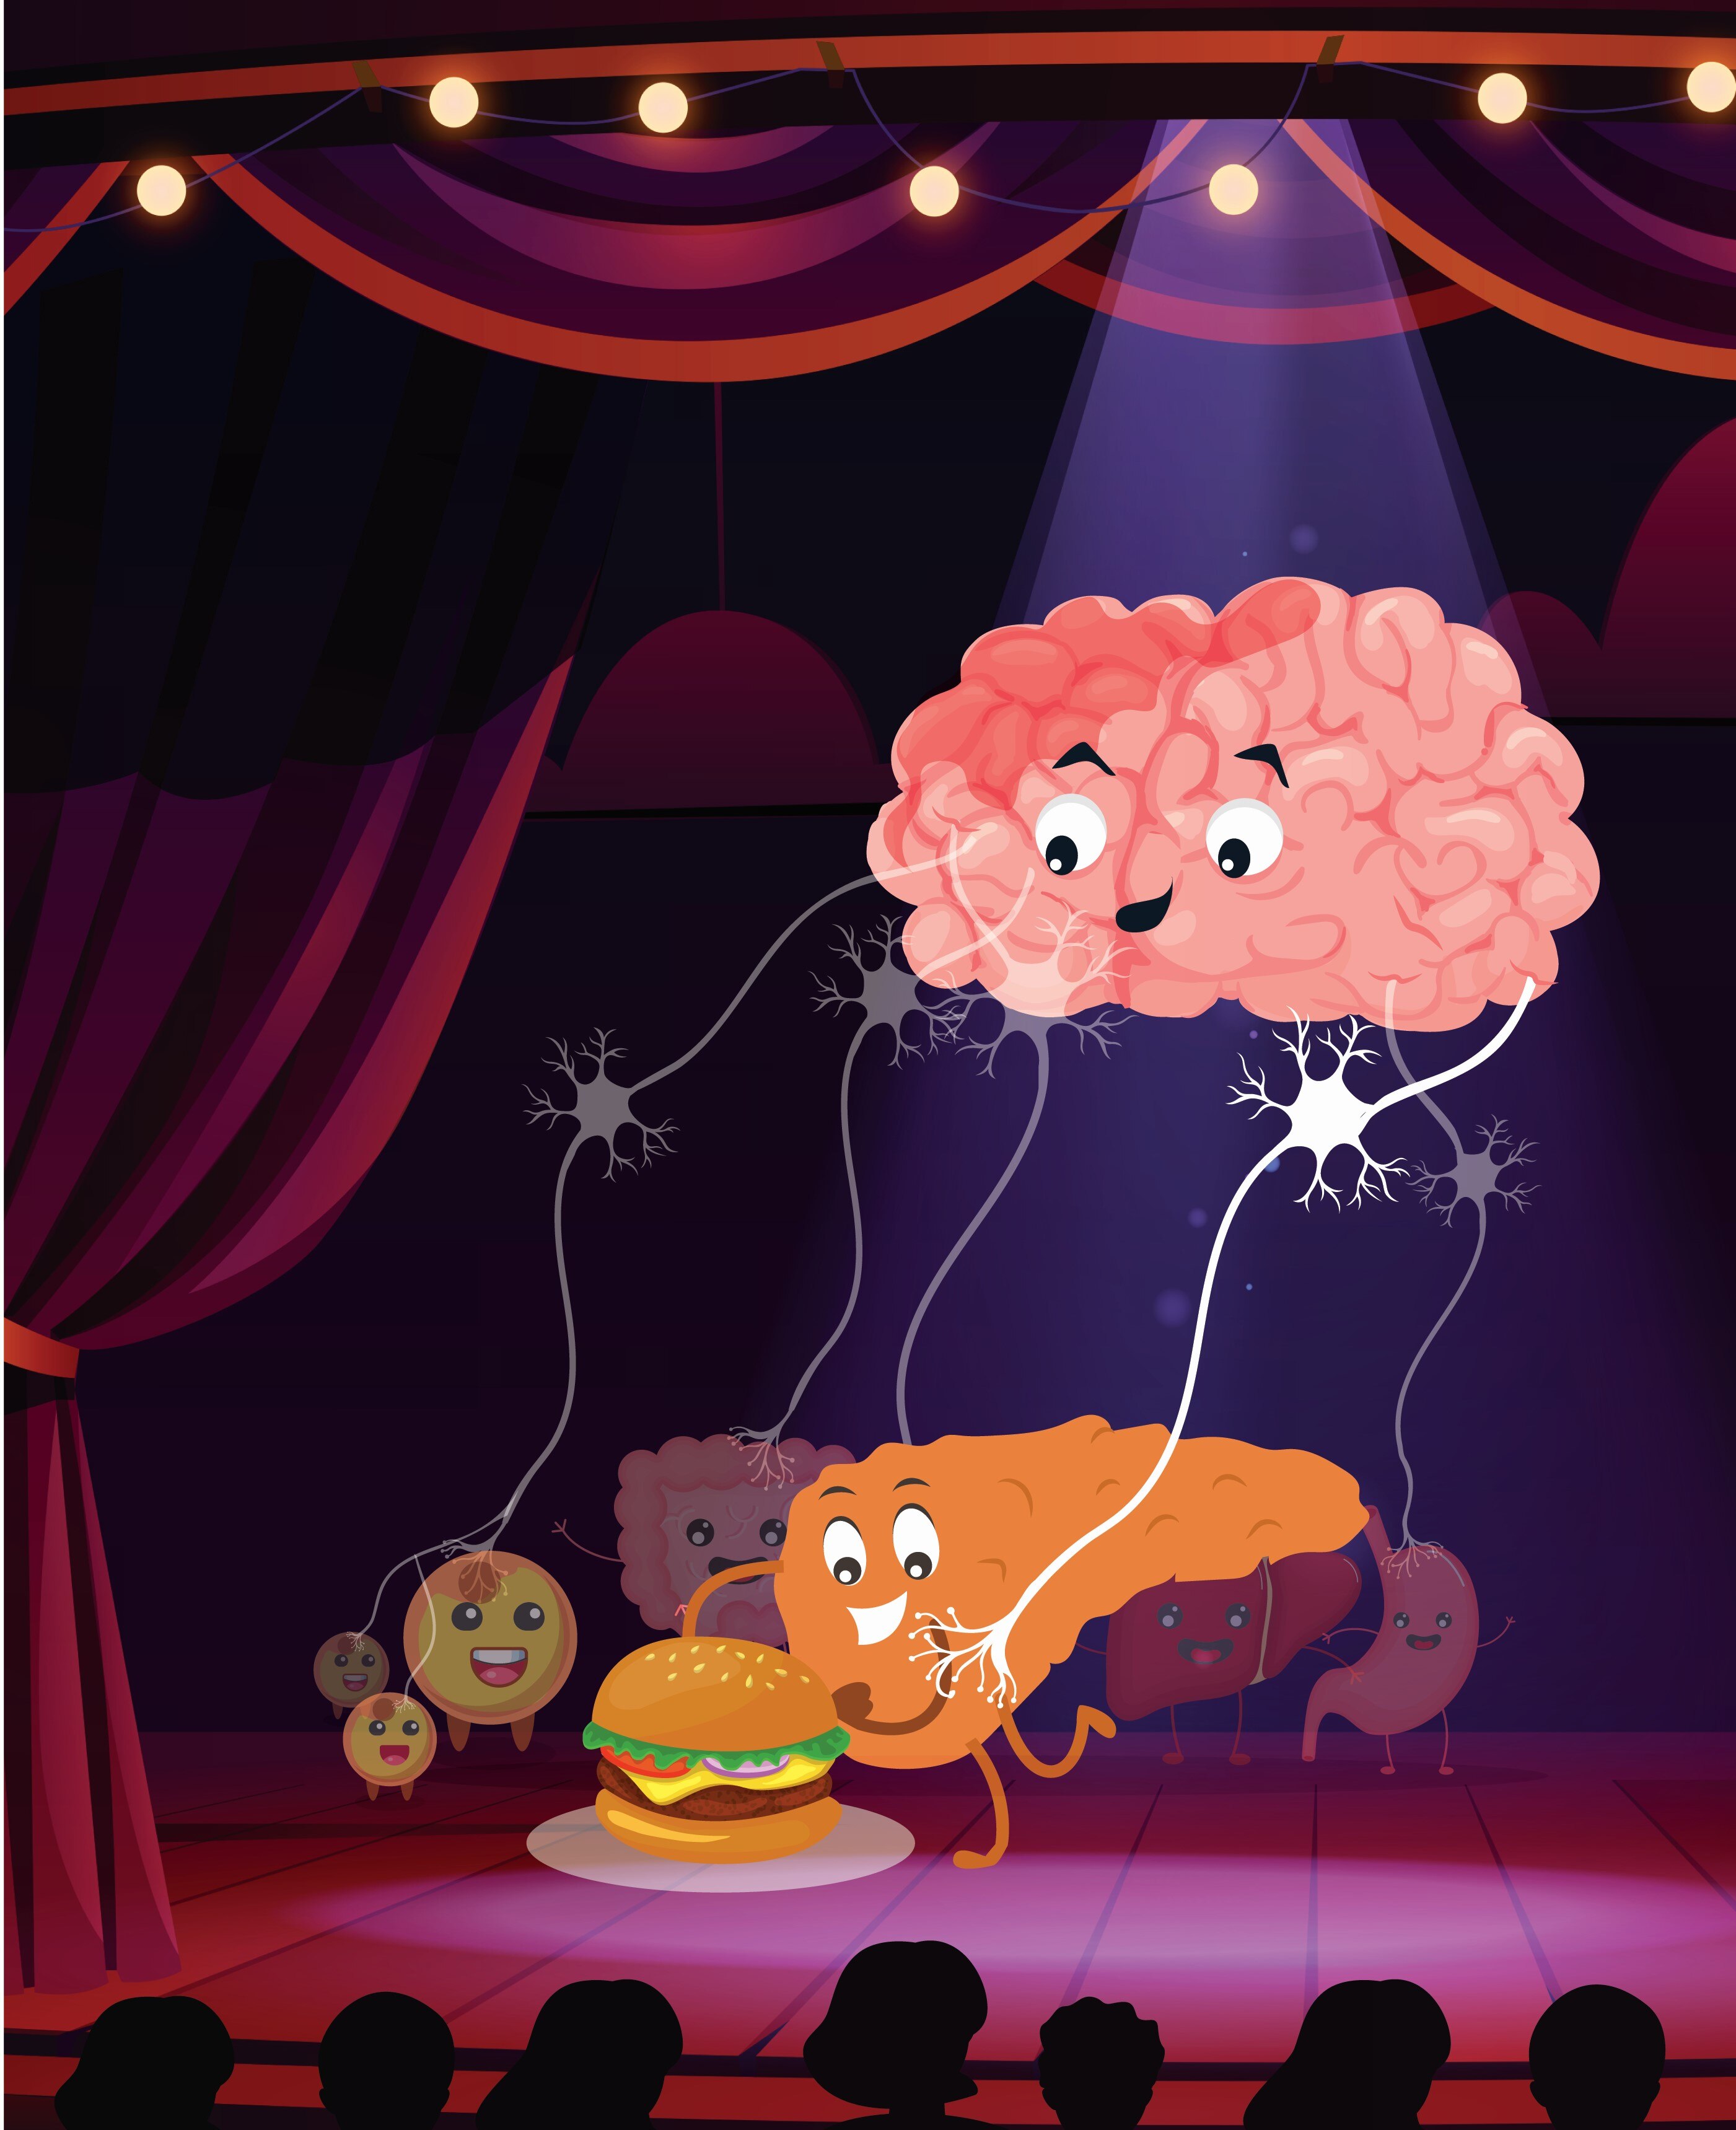 Cartoon of the brain regulating glucose levels.